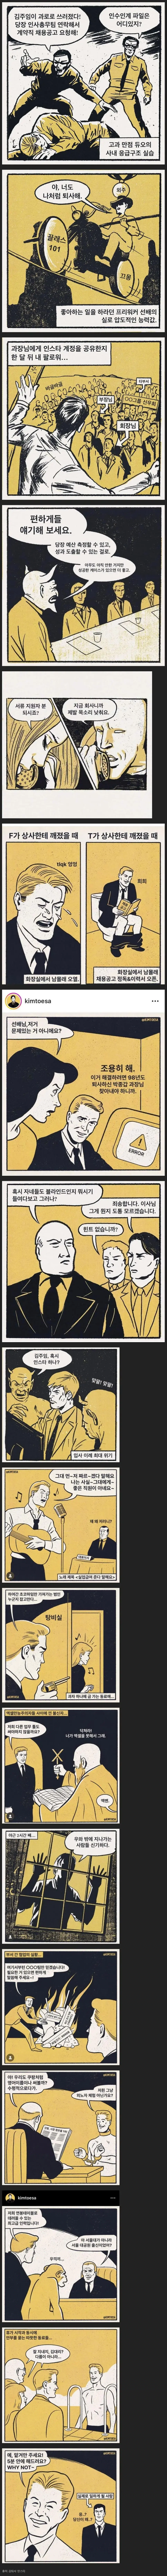 K 좆소 만화 | mbong.kr 엠봉